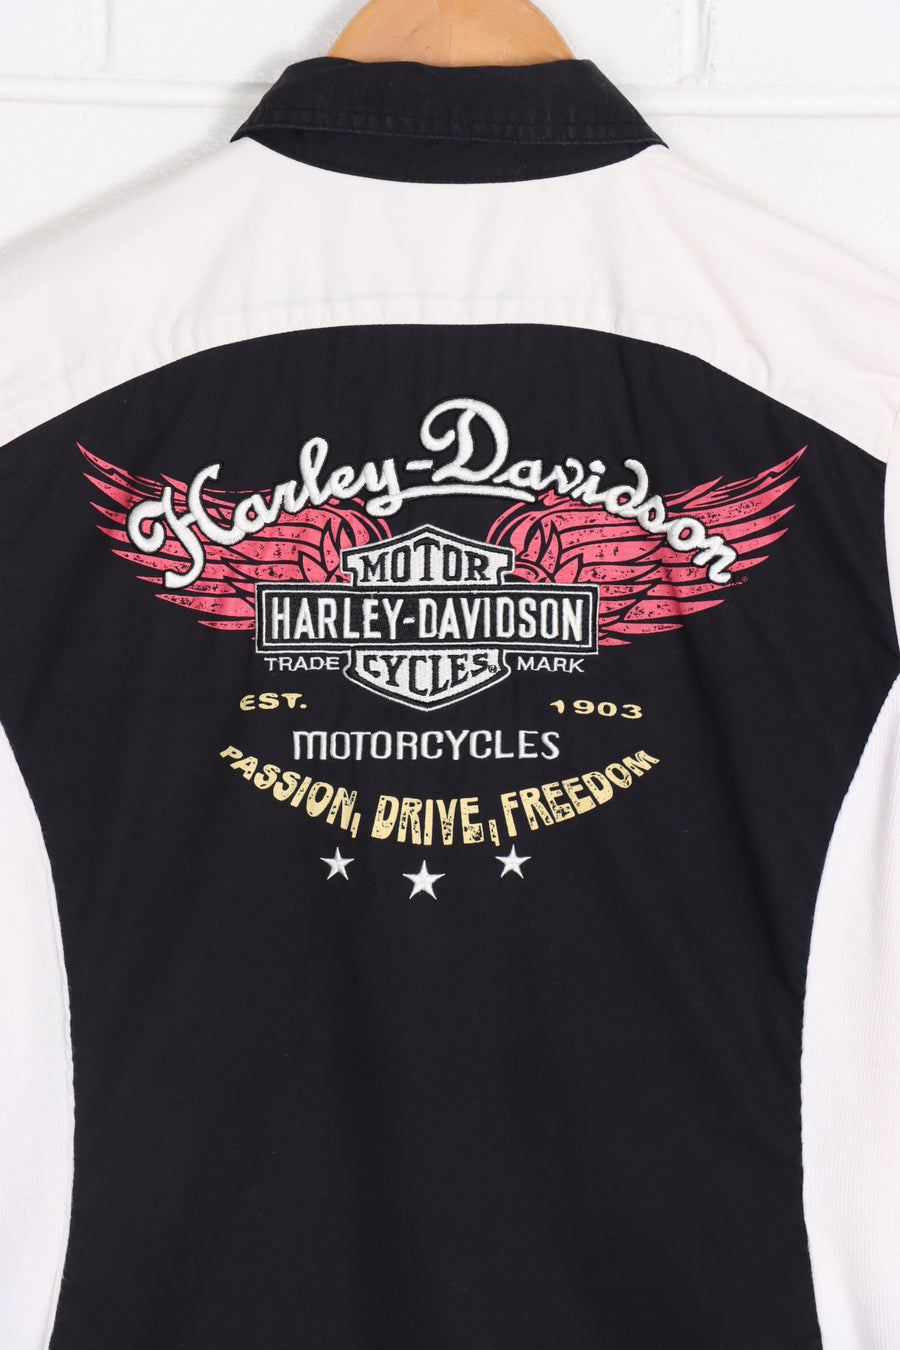 HARLEY DAVIDSON Embroidered Pink & Black Zip Up Tee (Women's M)